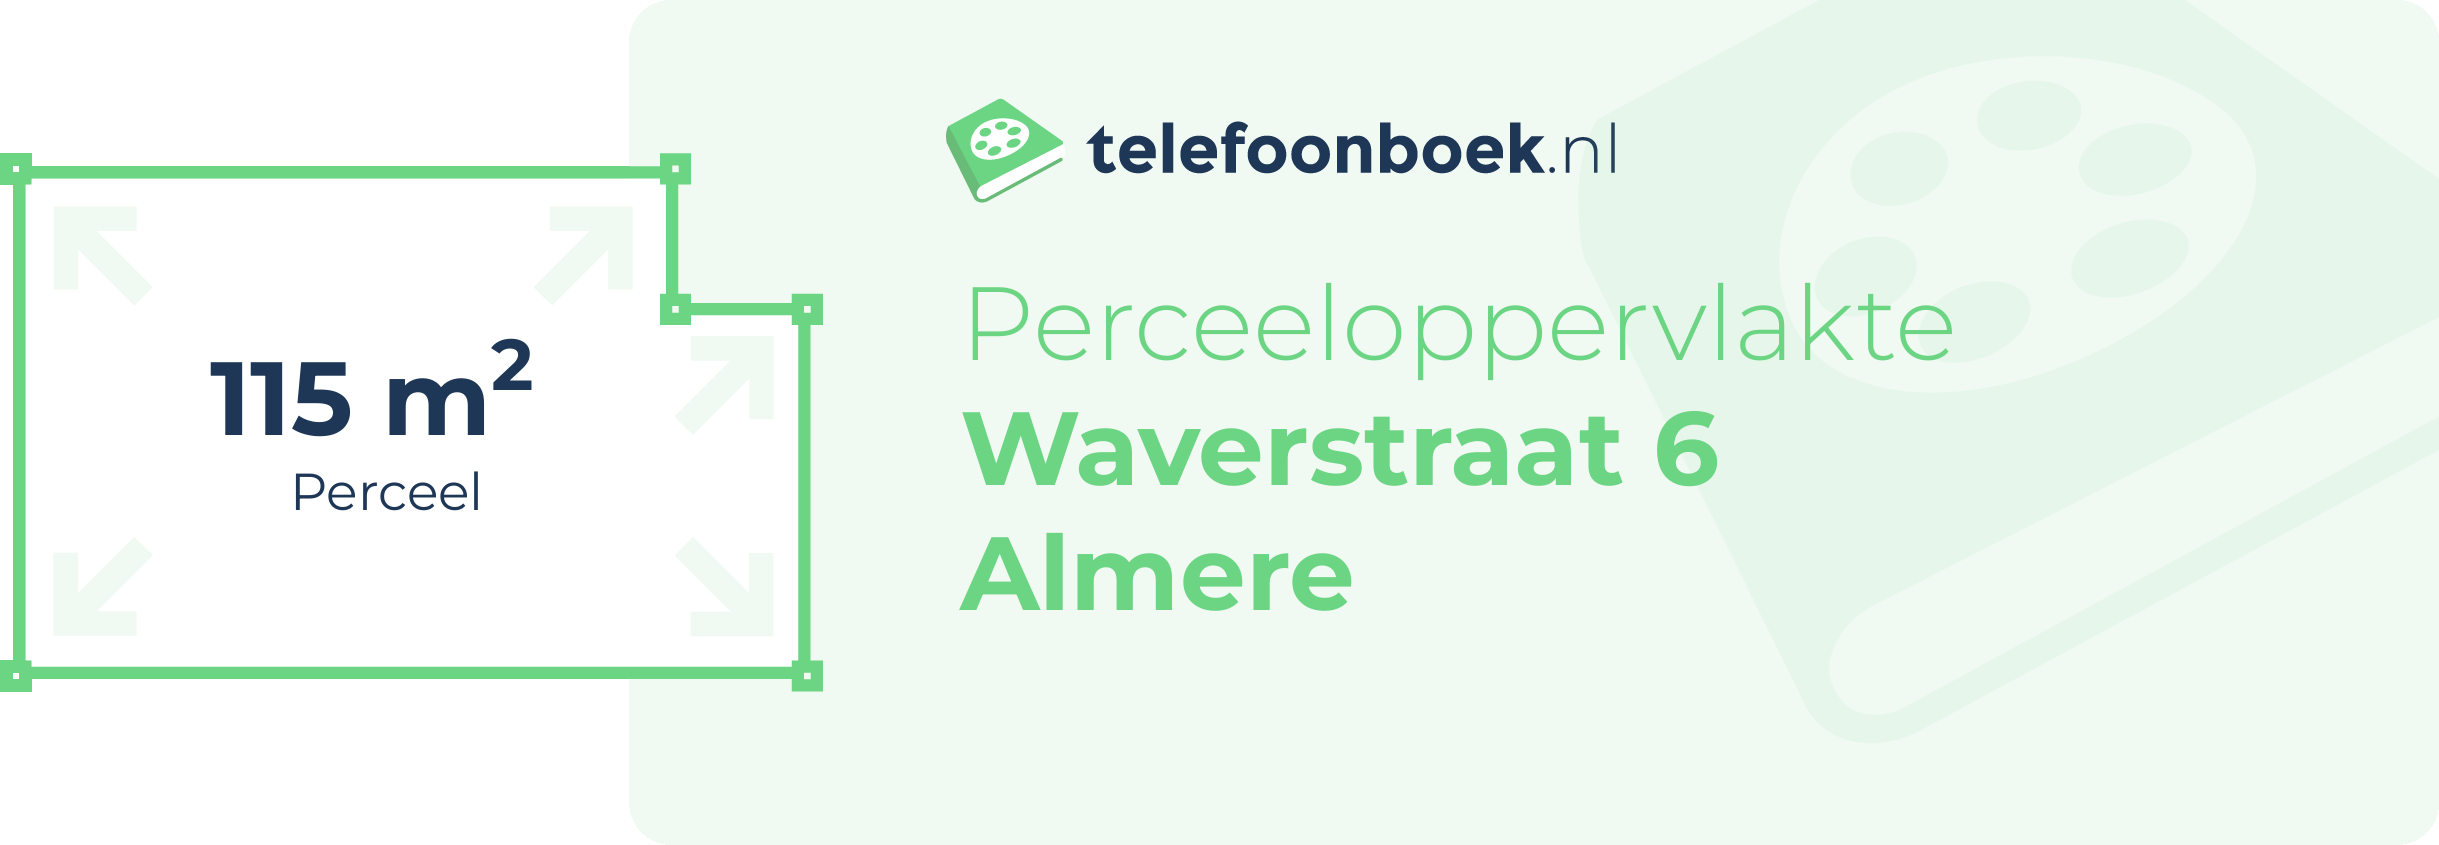 Perceeloppervlakte Waverstraat 6 Almere